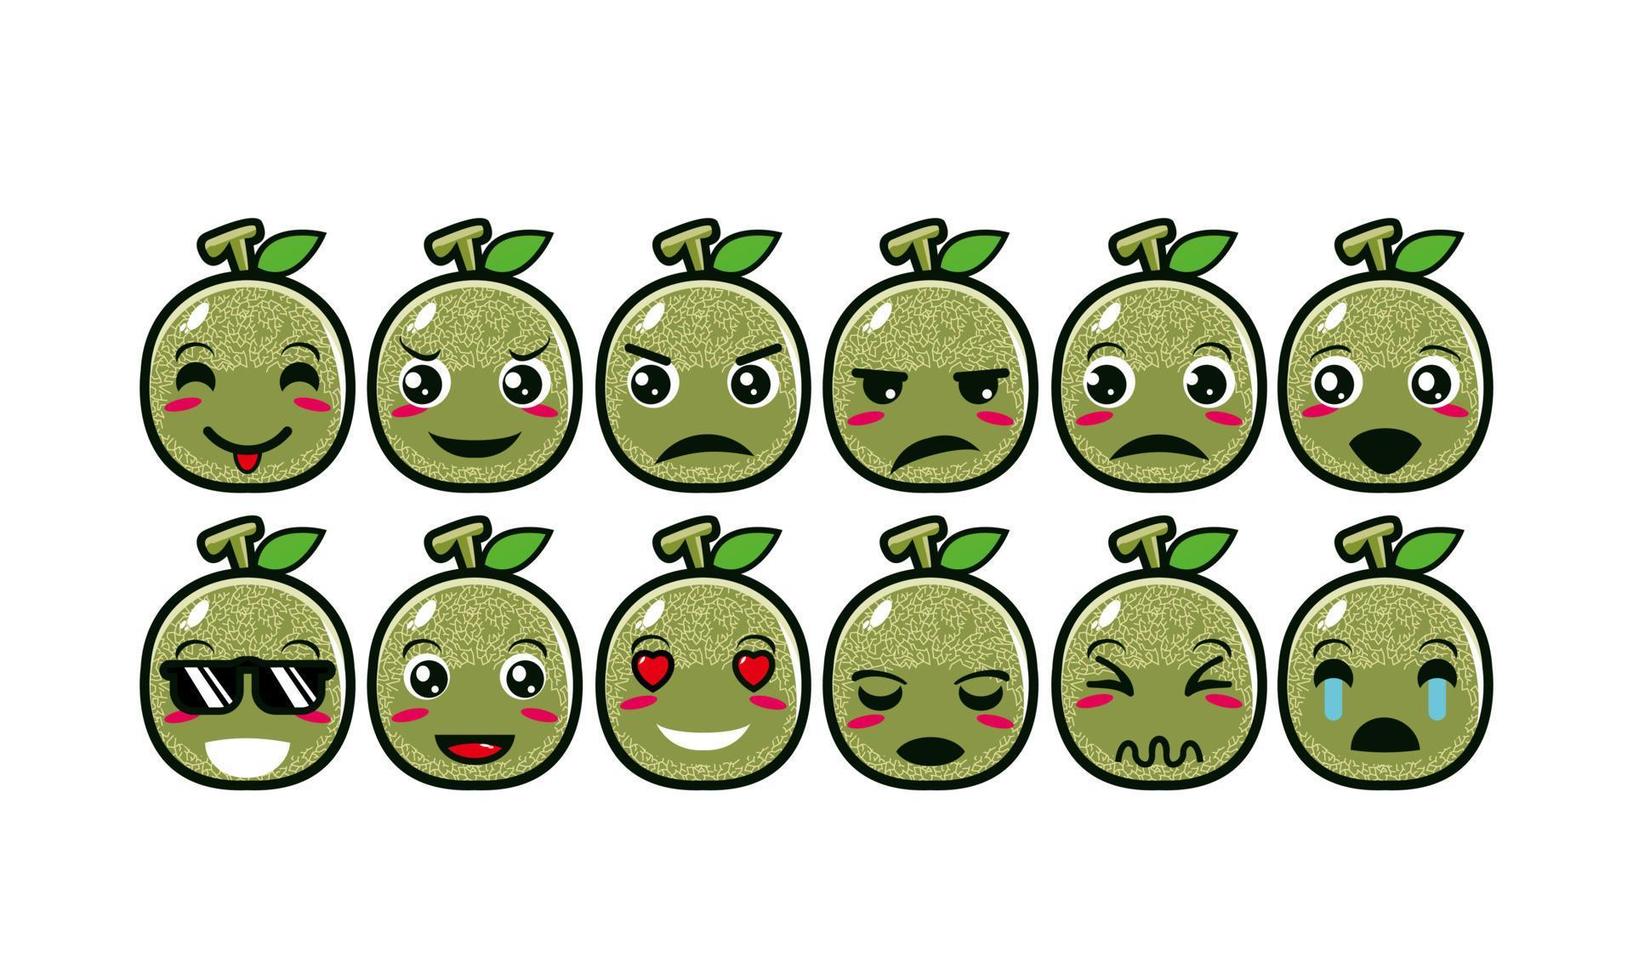 schattige lachende grappige meloen set collection.vector platte cartoon gezicht karakter mascotte illustratie .isolated op witte achtergrond vector